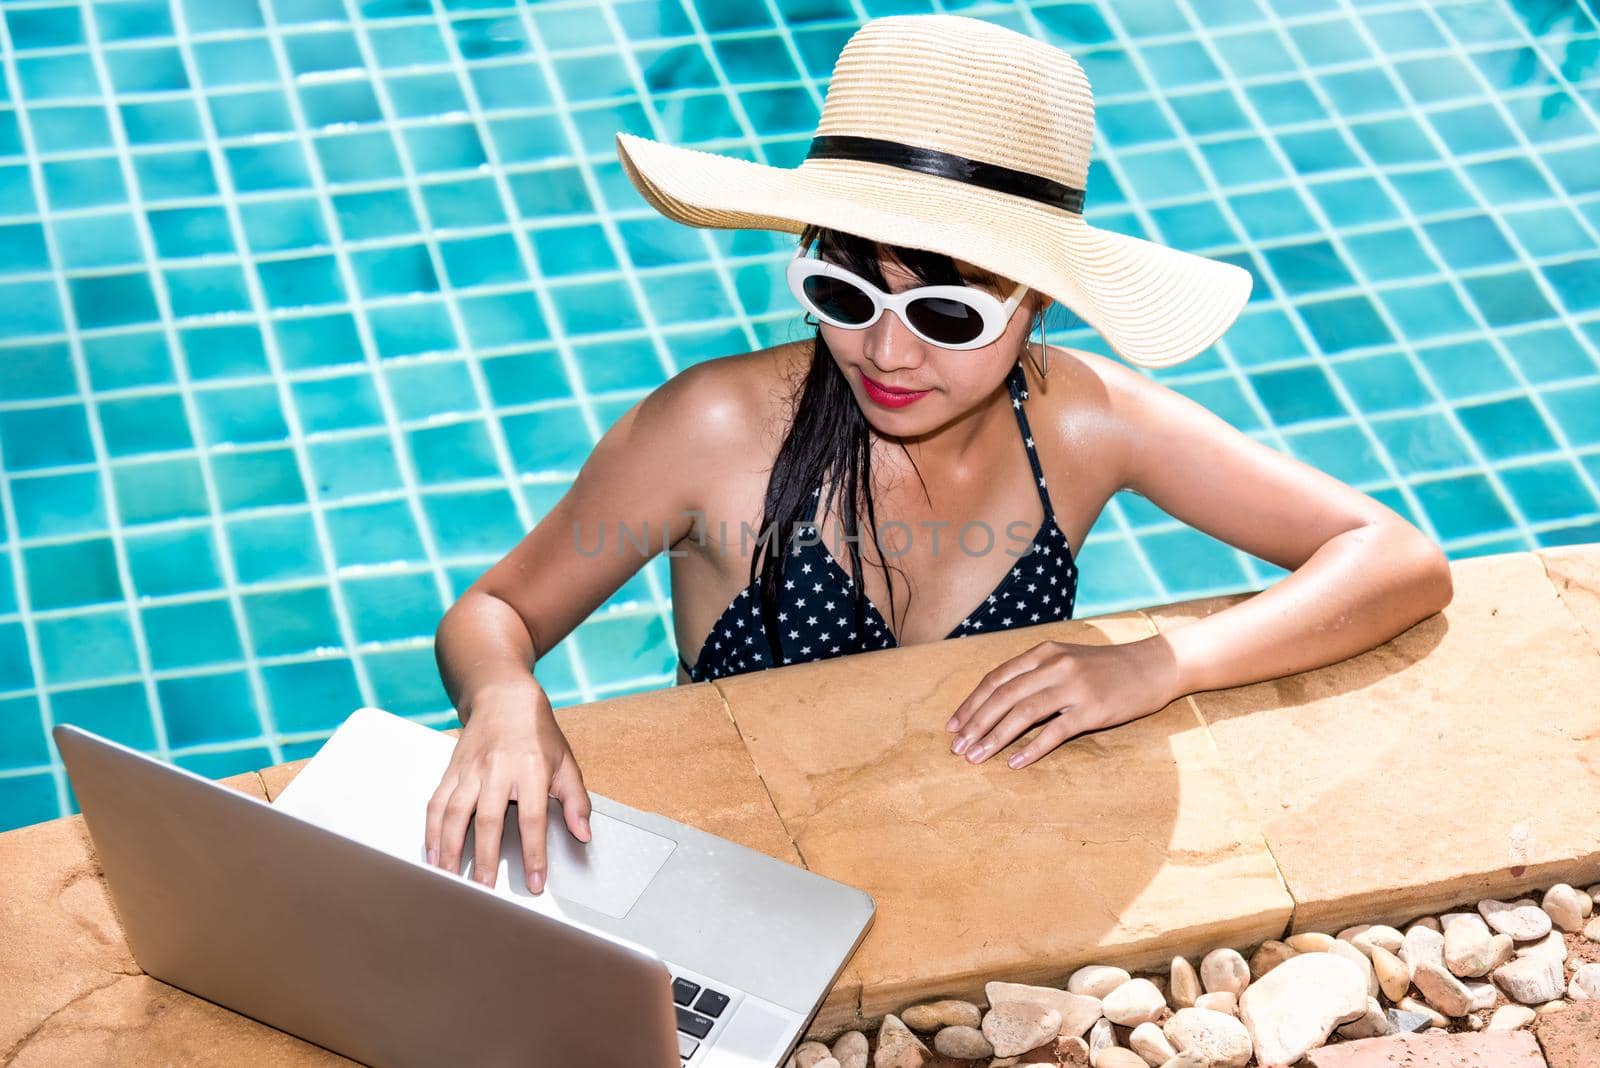 Beautiful girl woman in bikini relaxing pool and using laptop on edge while smiling, blue water